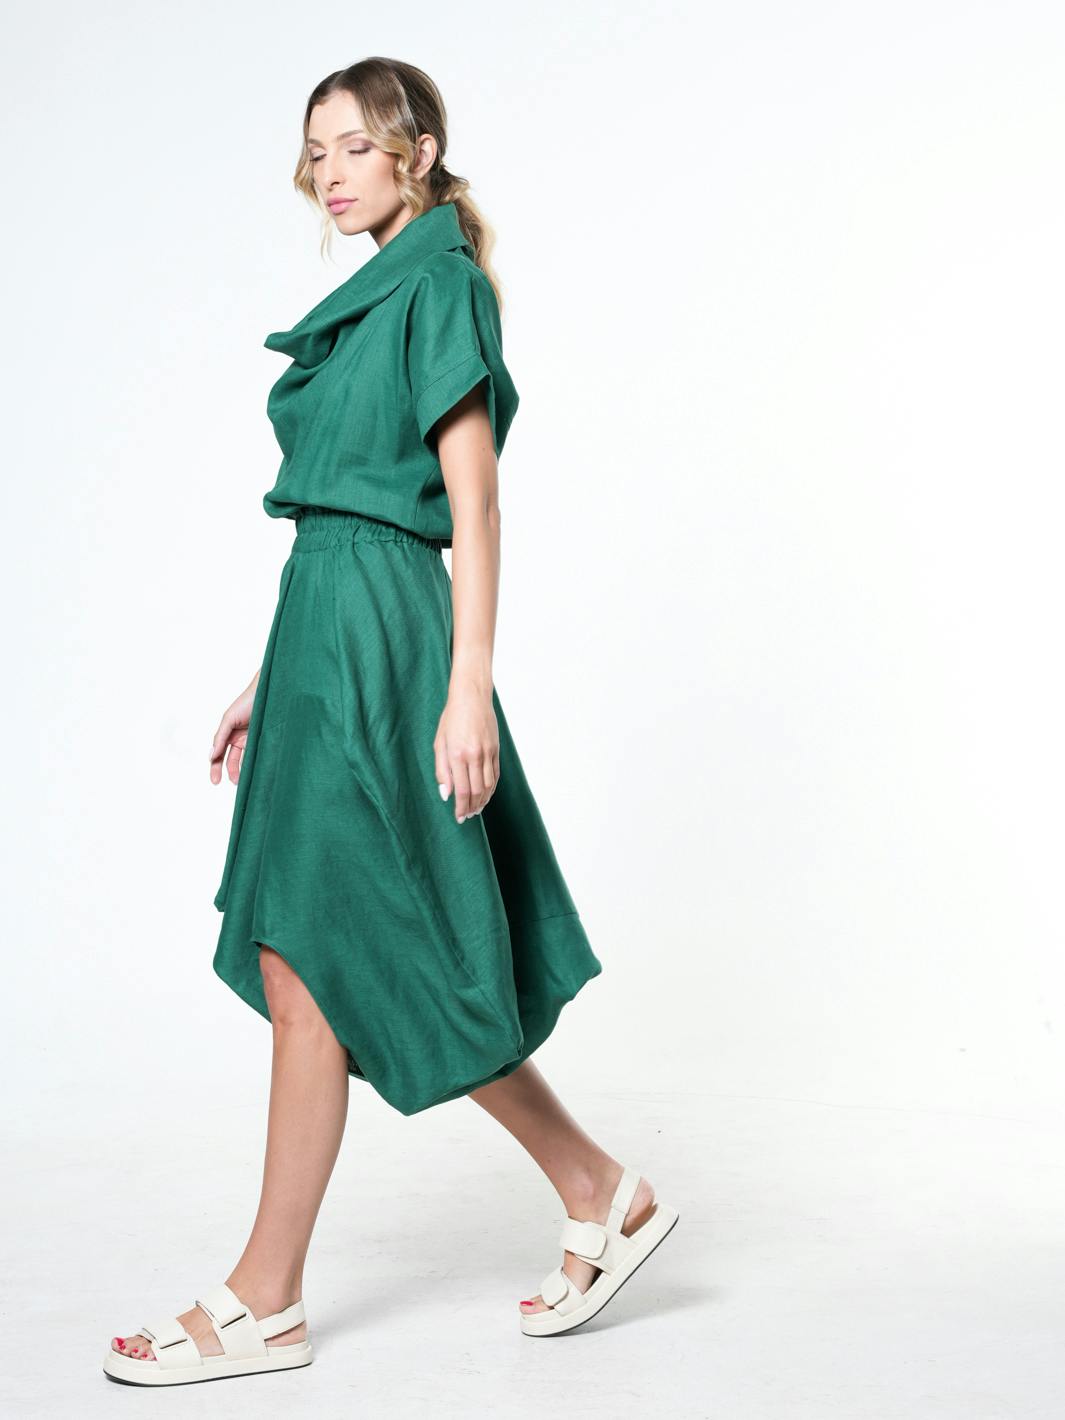 Thumbnail preview #5 for Cowl Neck Linen Dress 